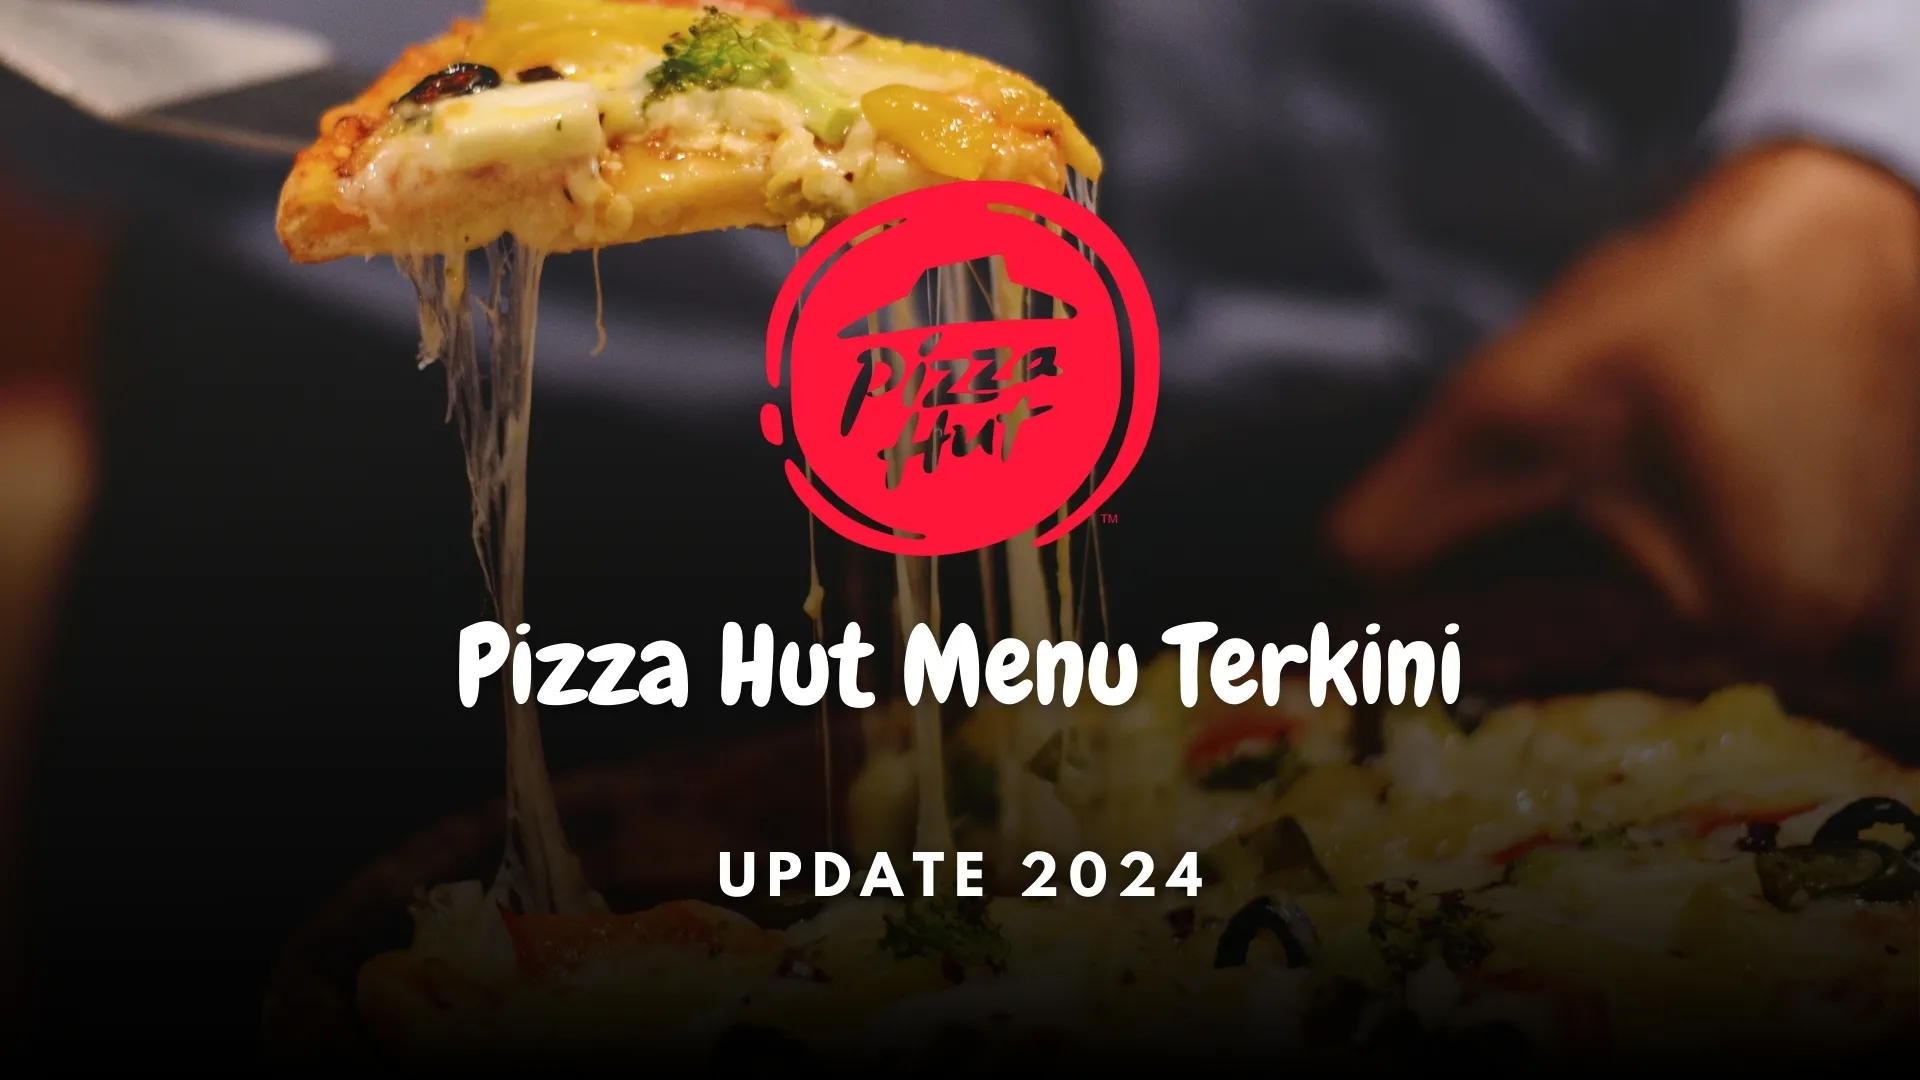 pizzahut menu terkini 2024